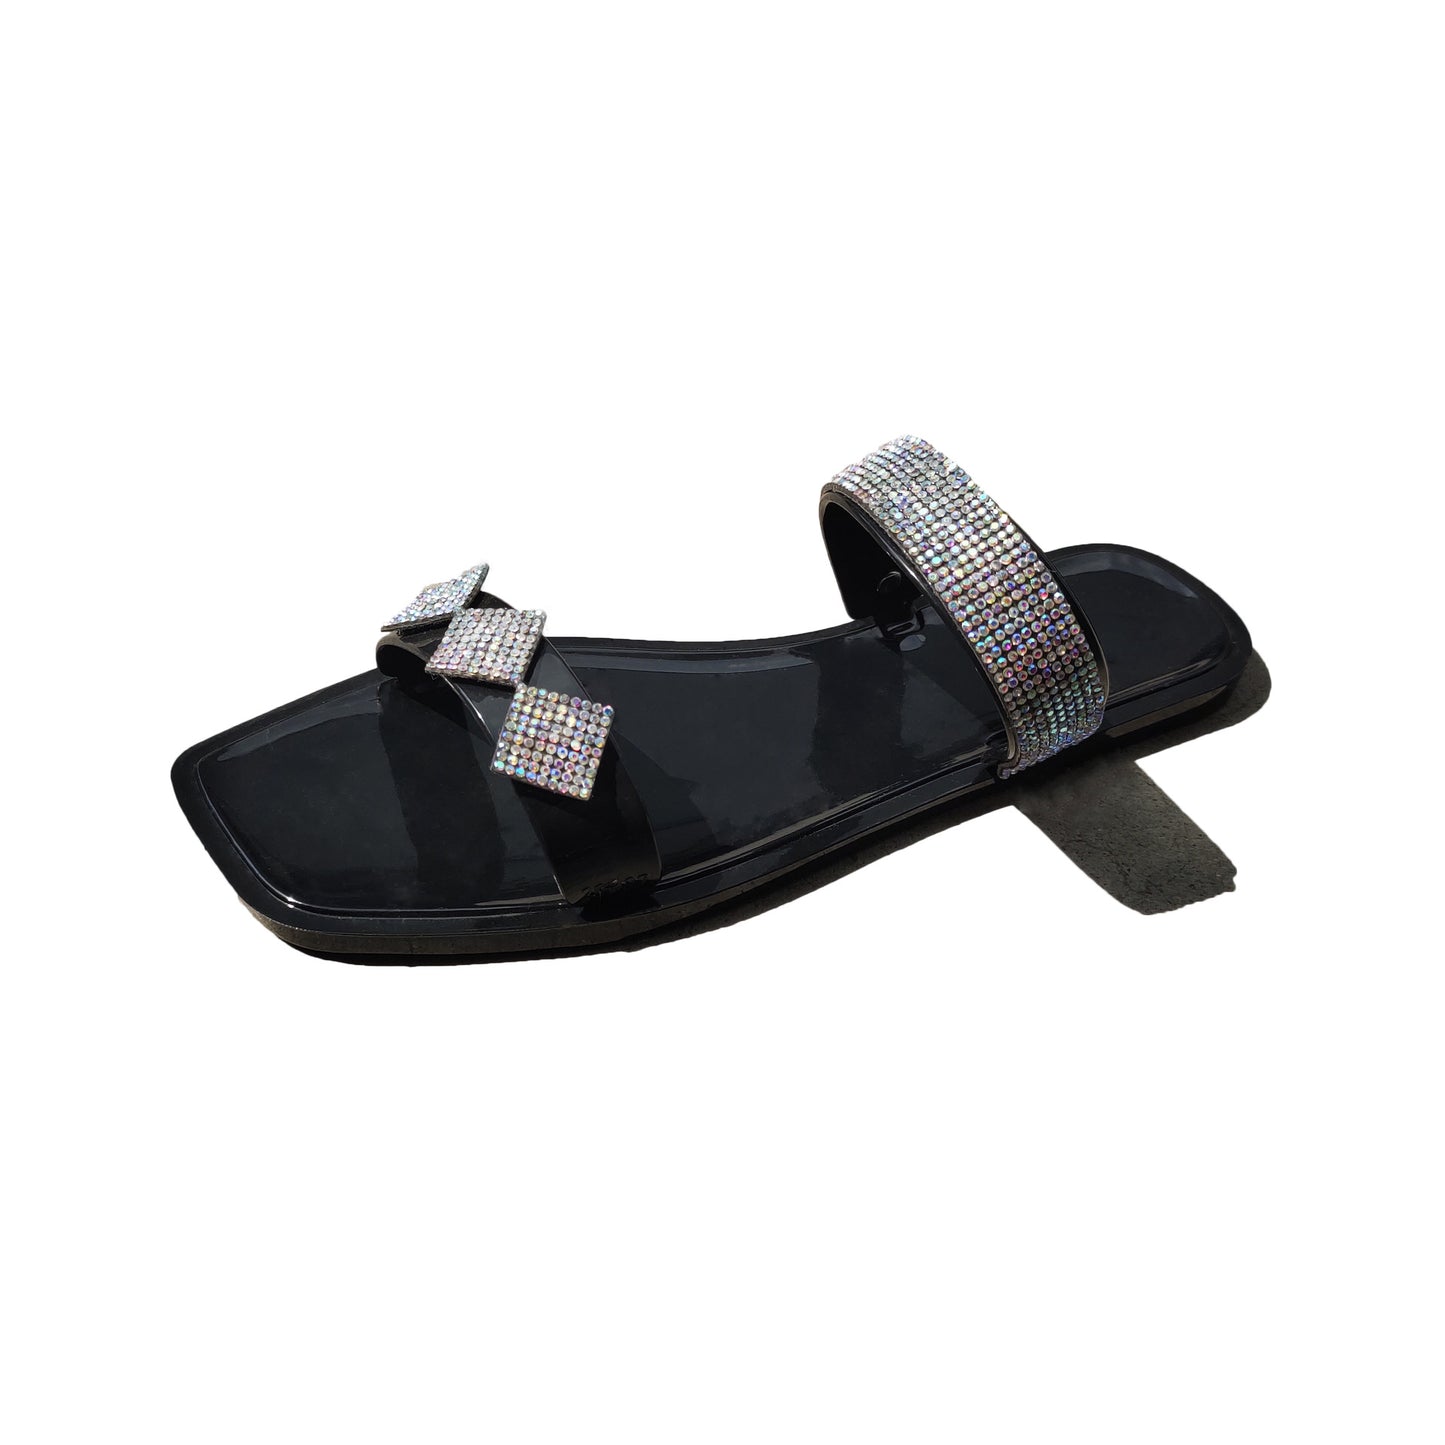 Sandali con diamanti leggeri a due cinturini con punta quadrata